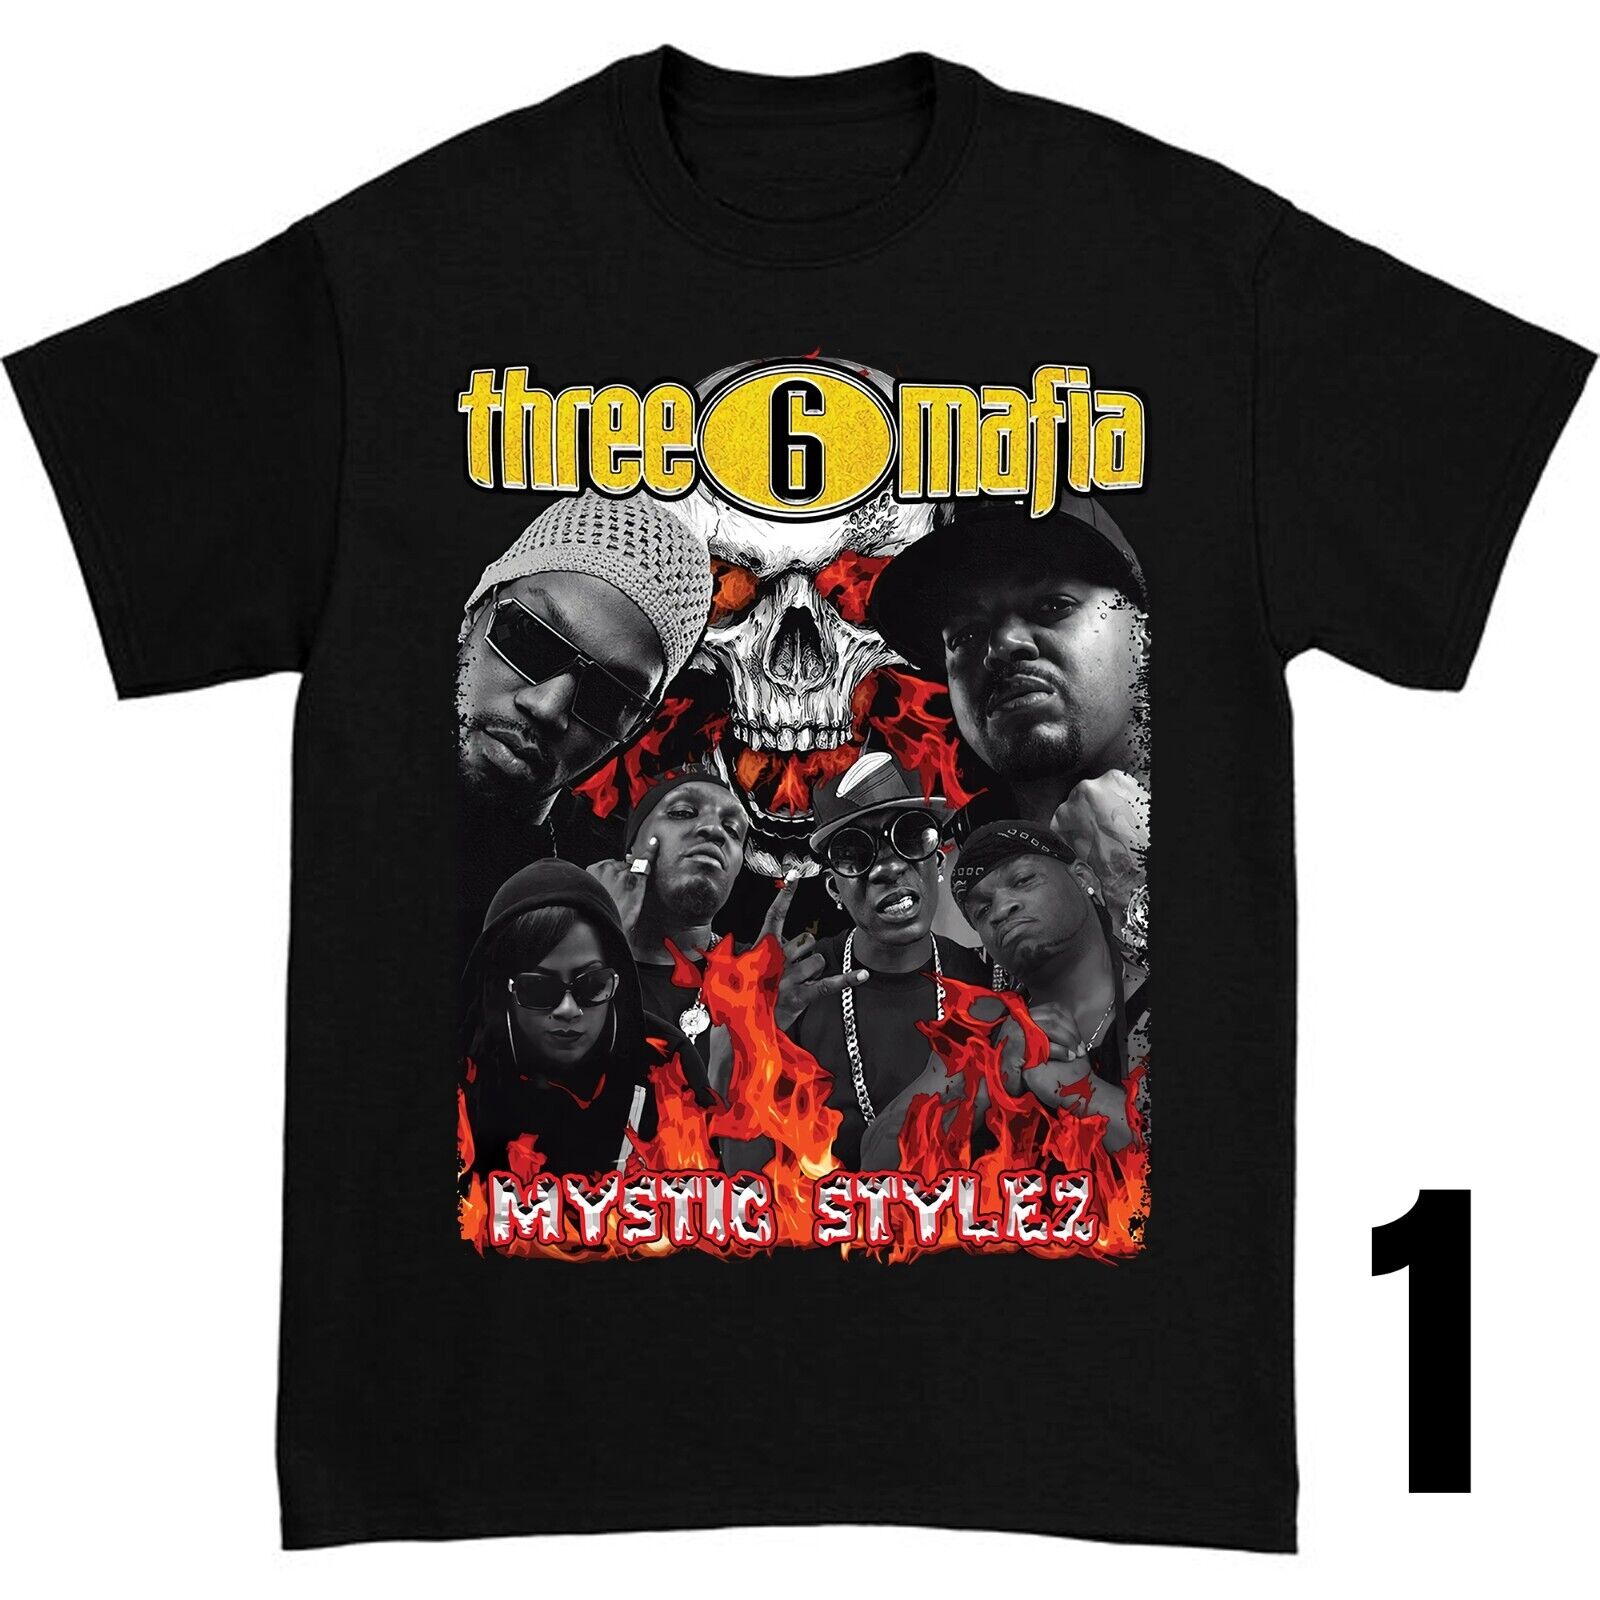 Hot Three 6 Mafia Cotton Unisex All-Size Shirt Best Value